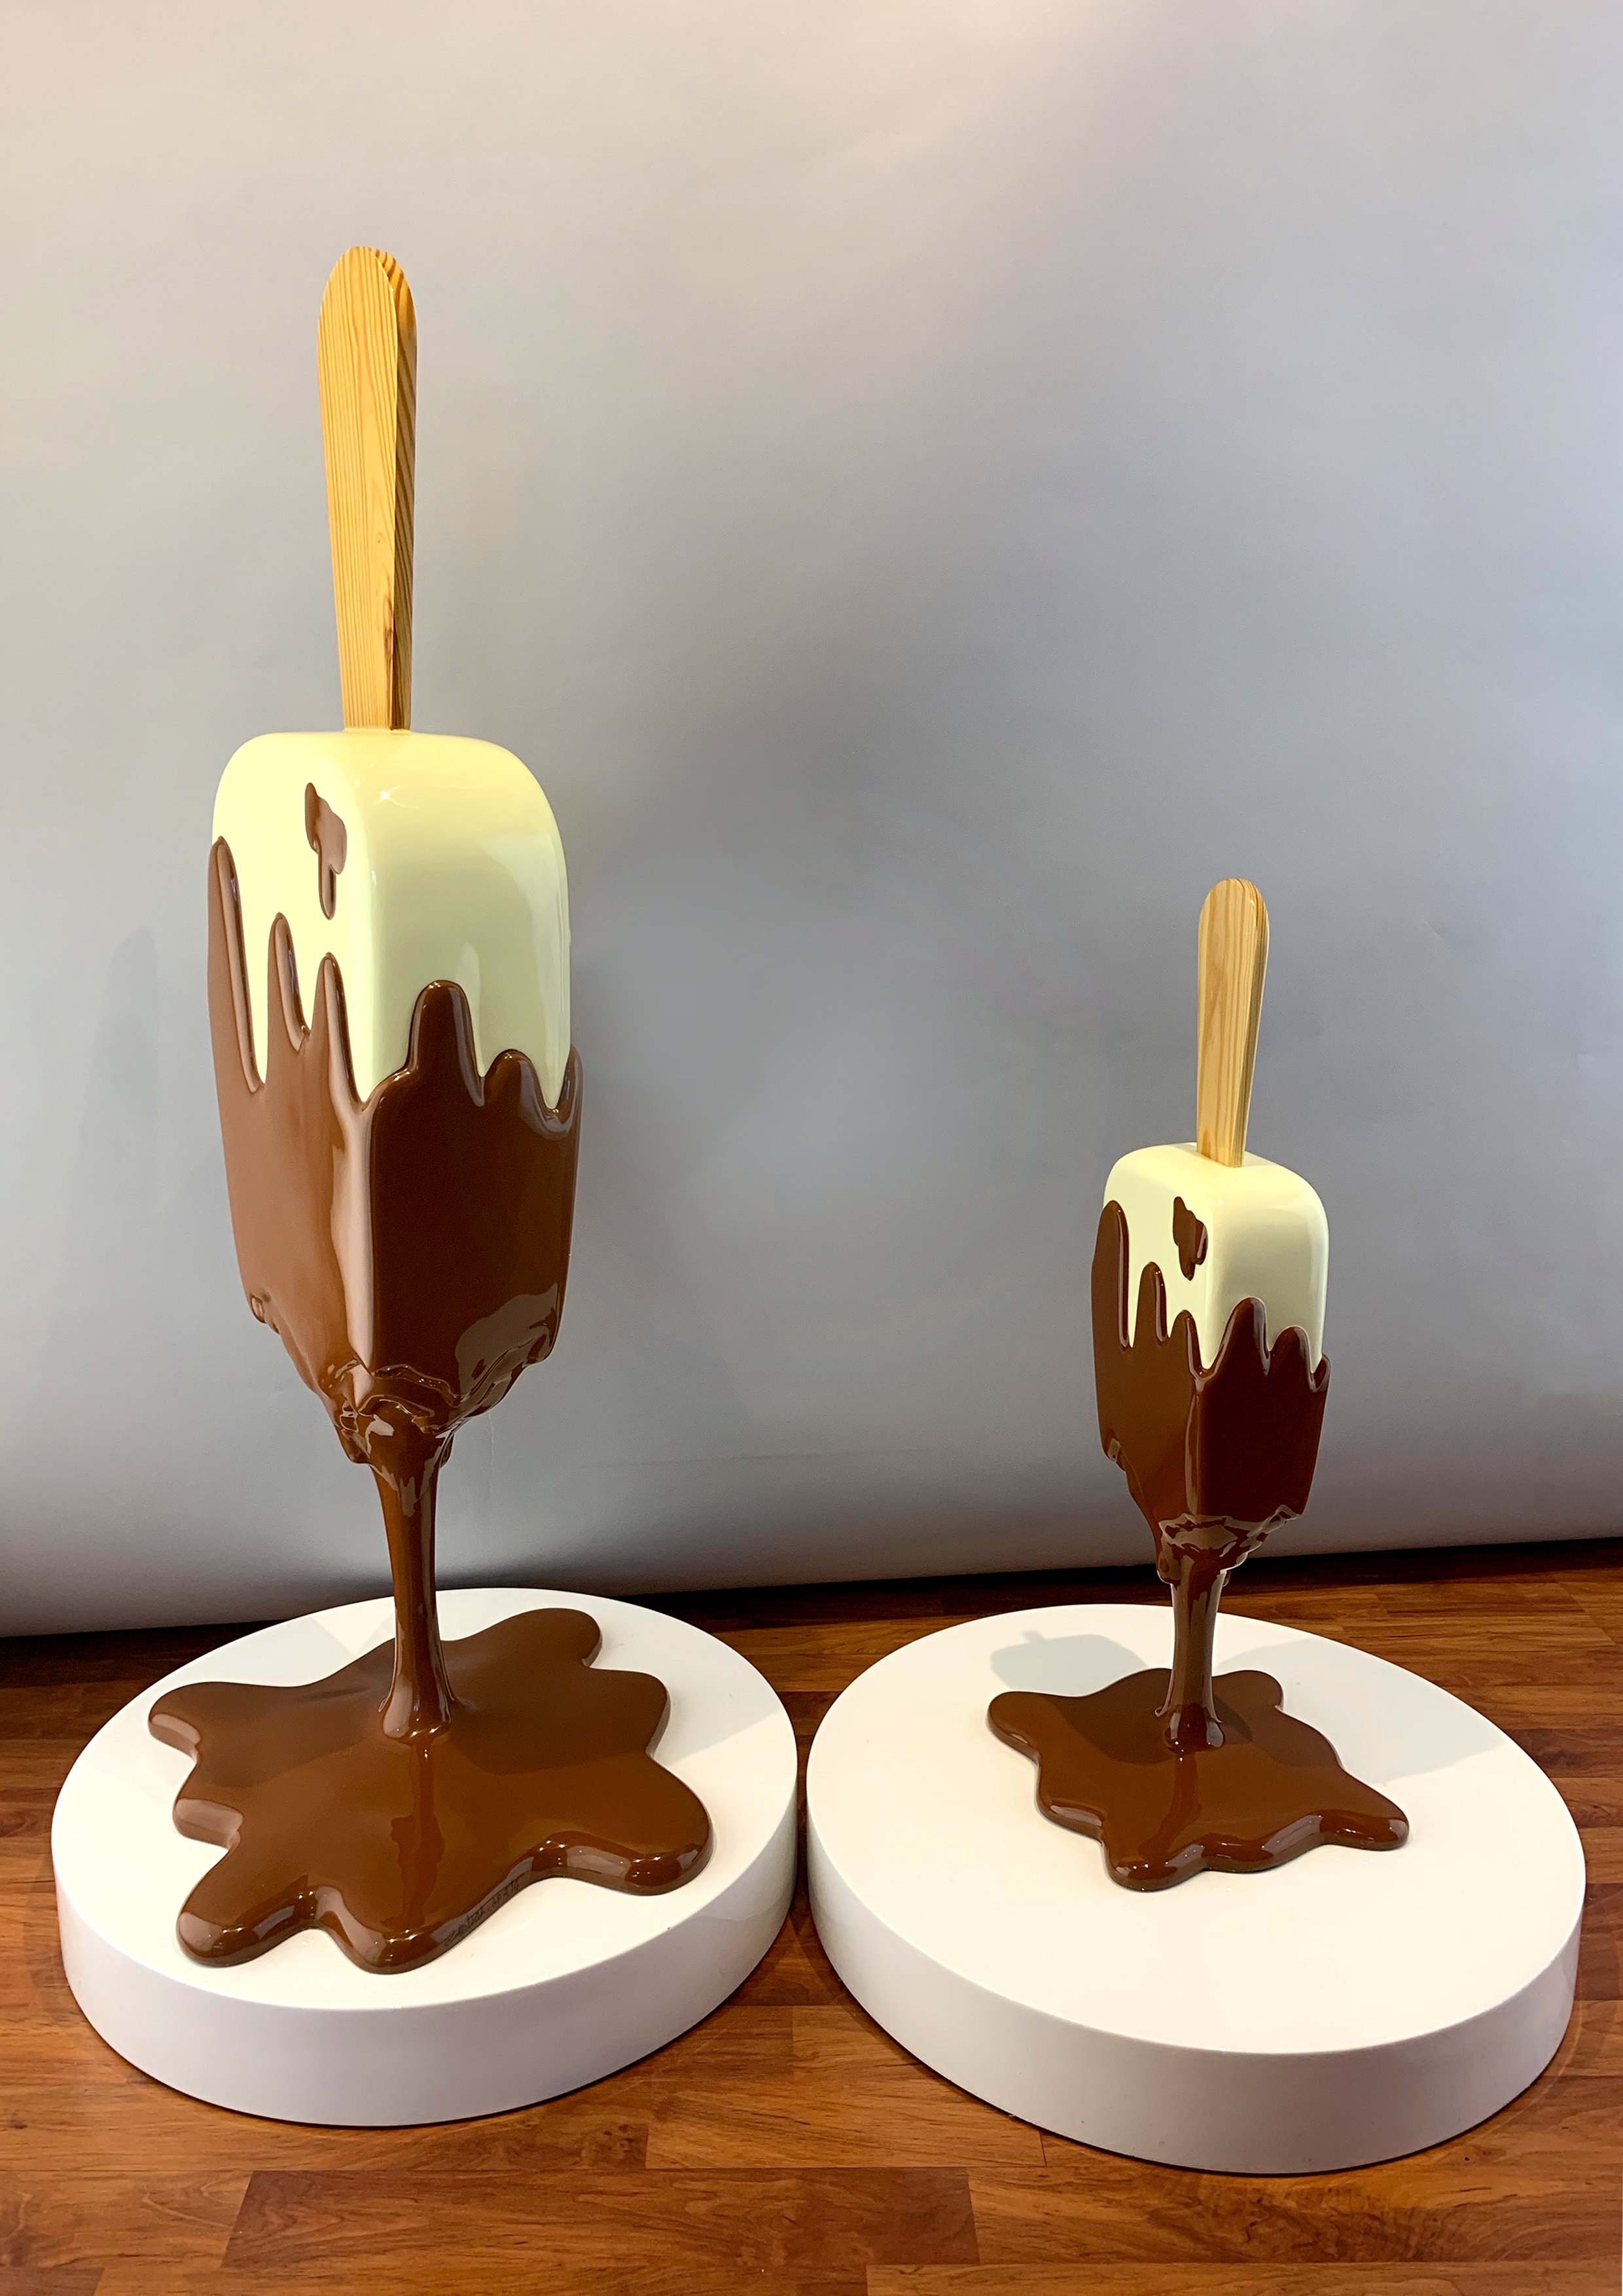 Vanilla chocolate ice cream pop art sculptures